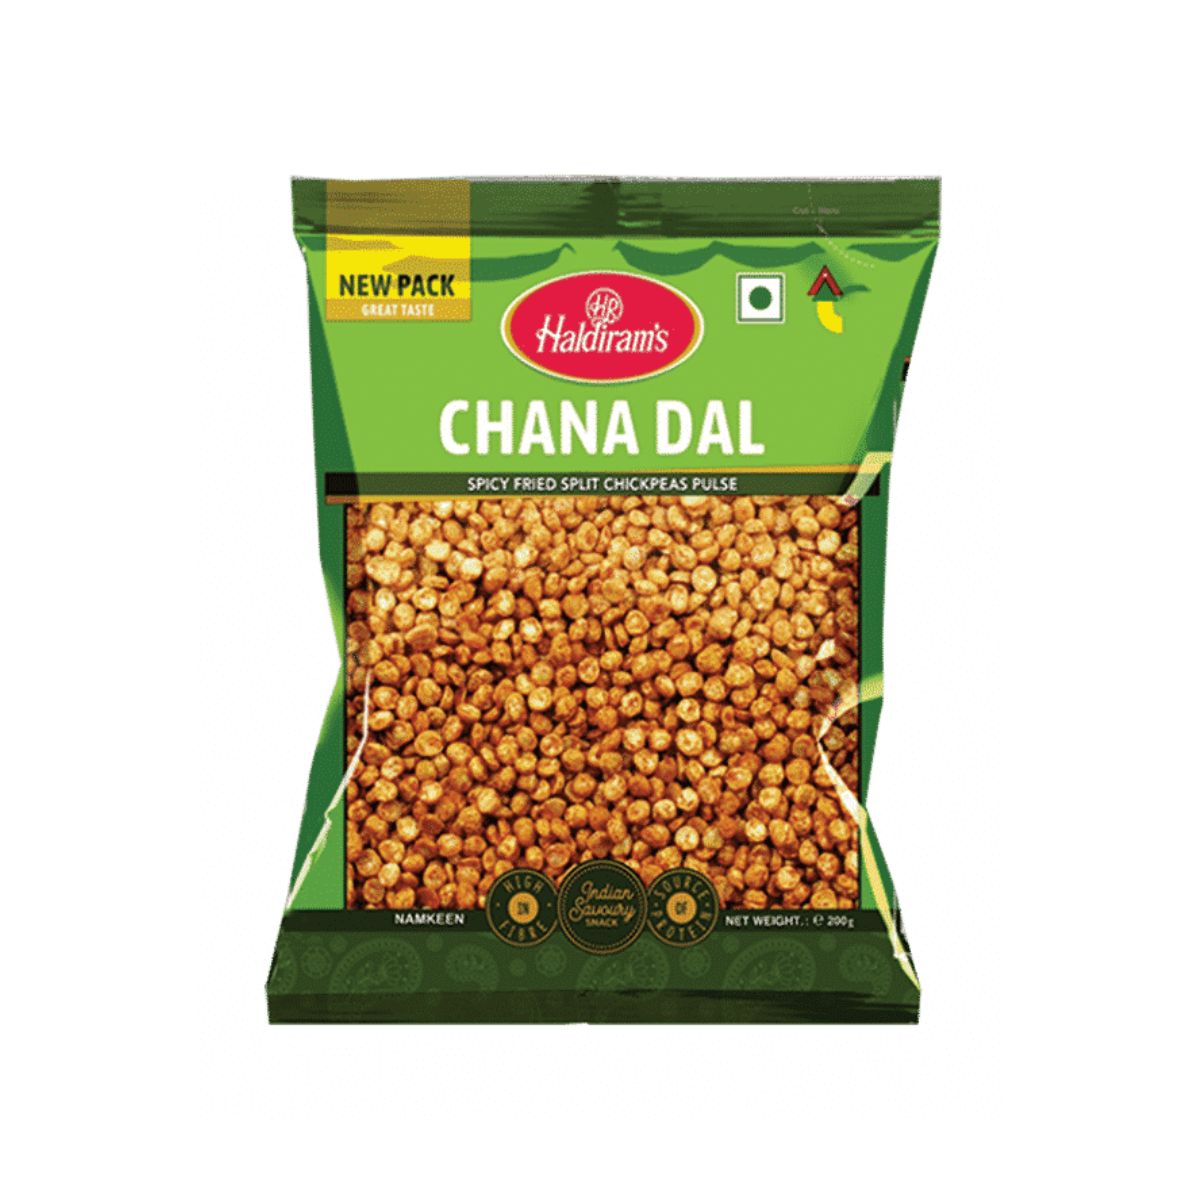 Haldiram's Chana Dal - Spicy Fried Split Chickpeas Pulse - 200g